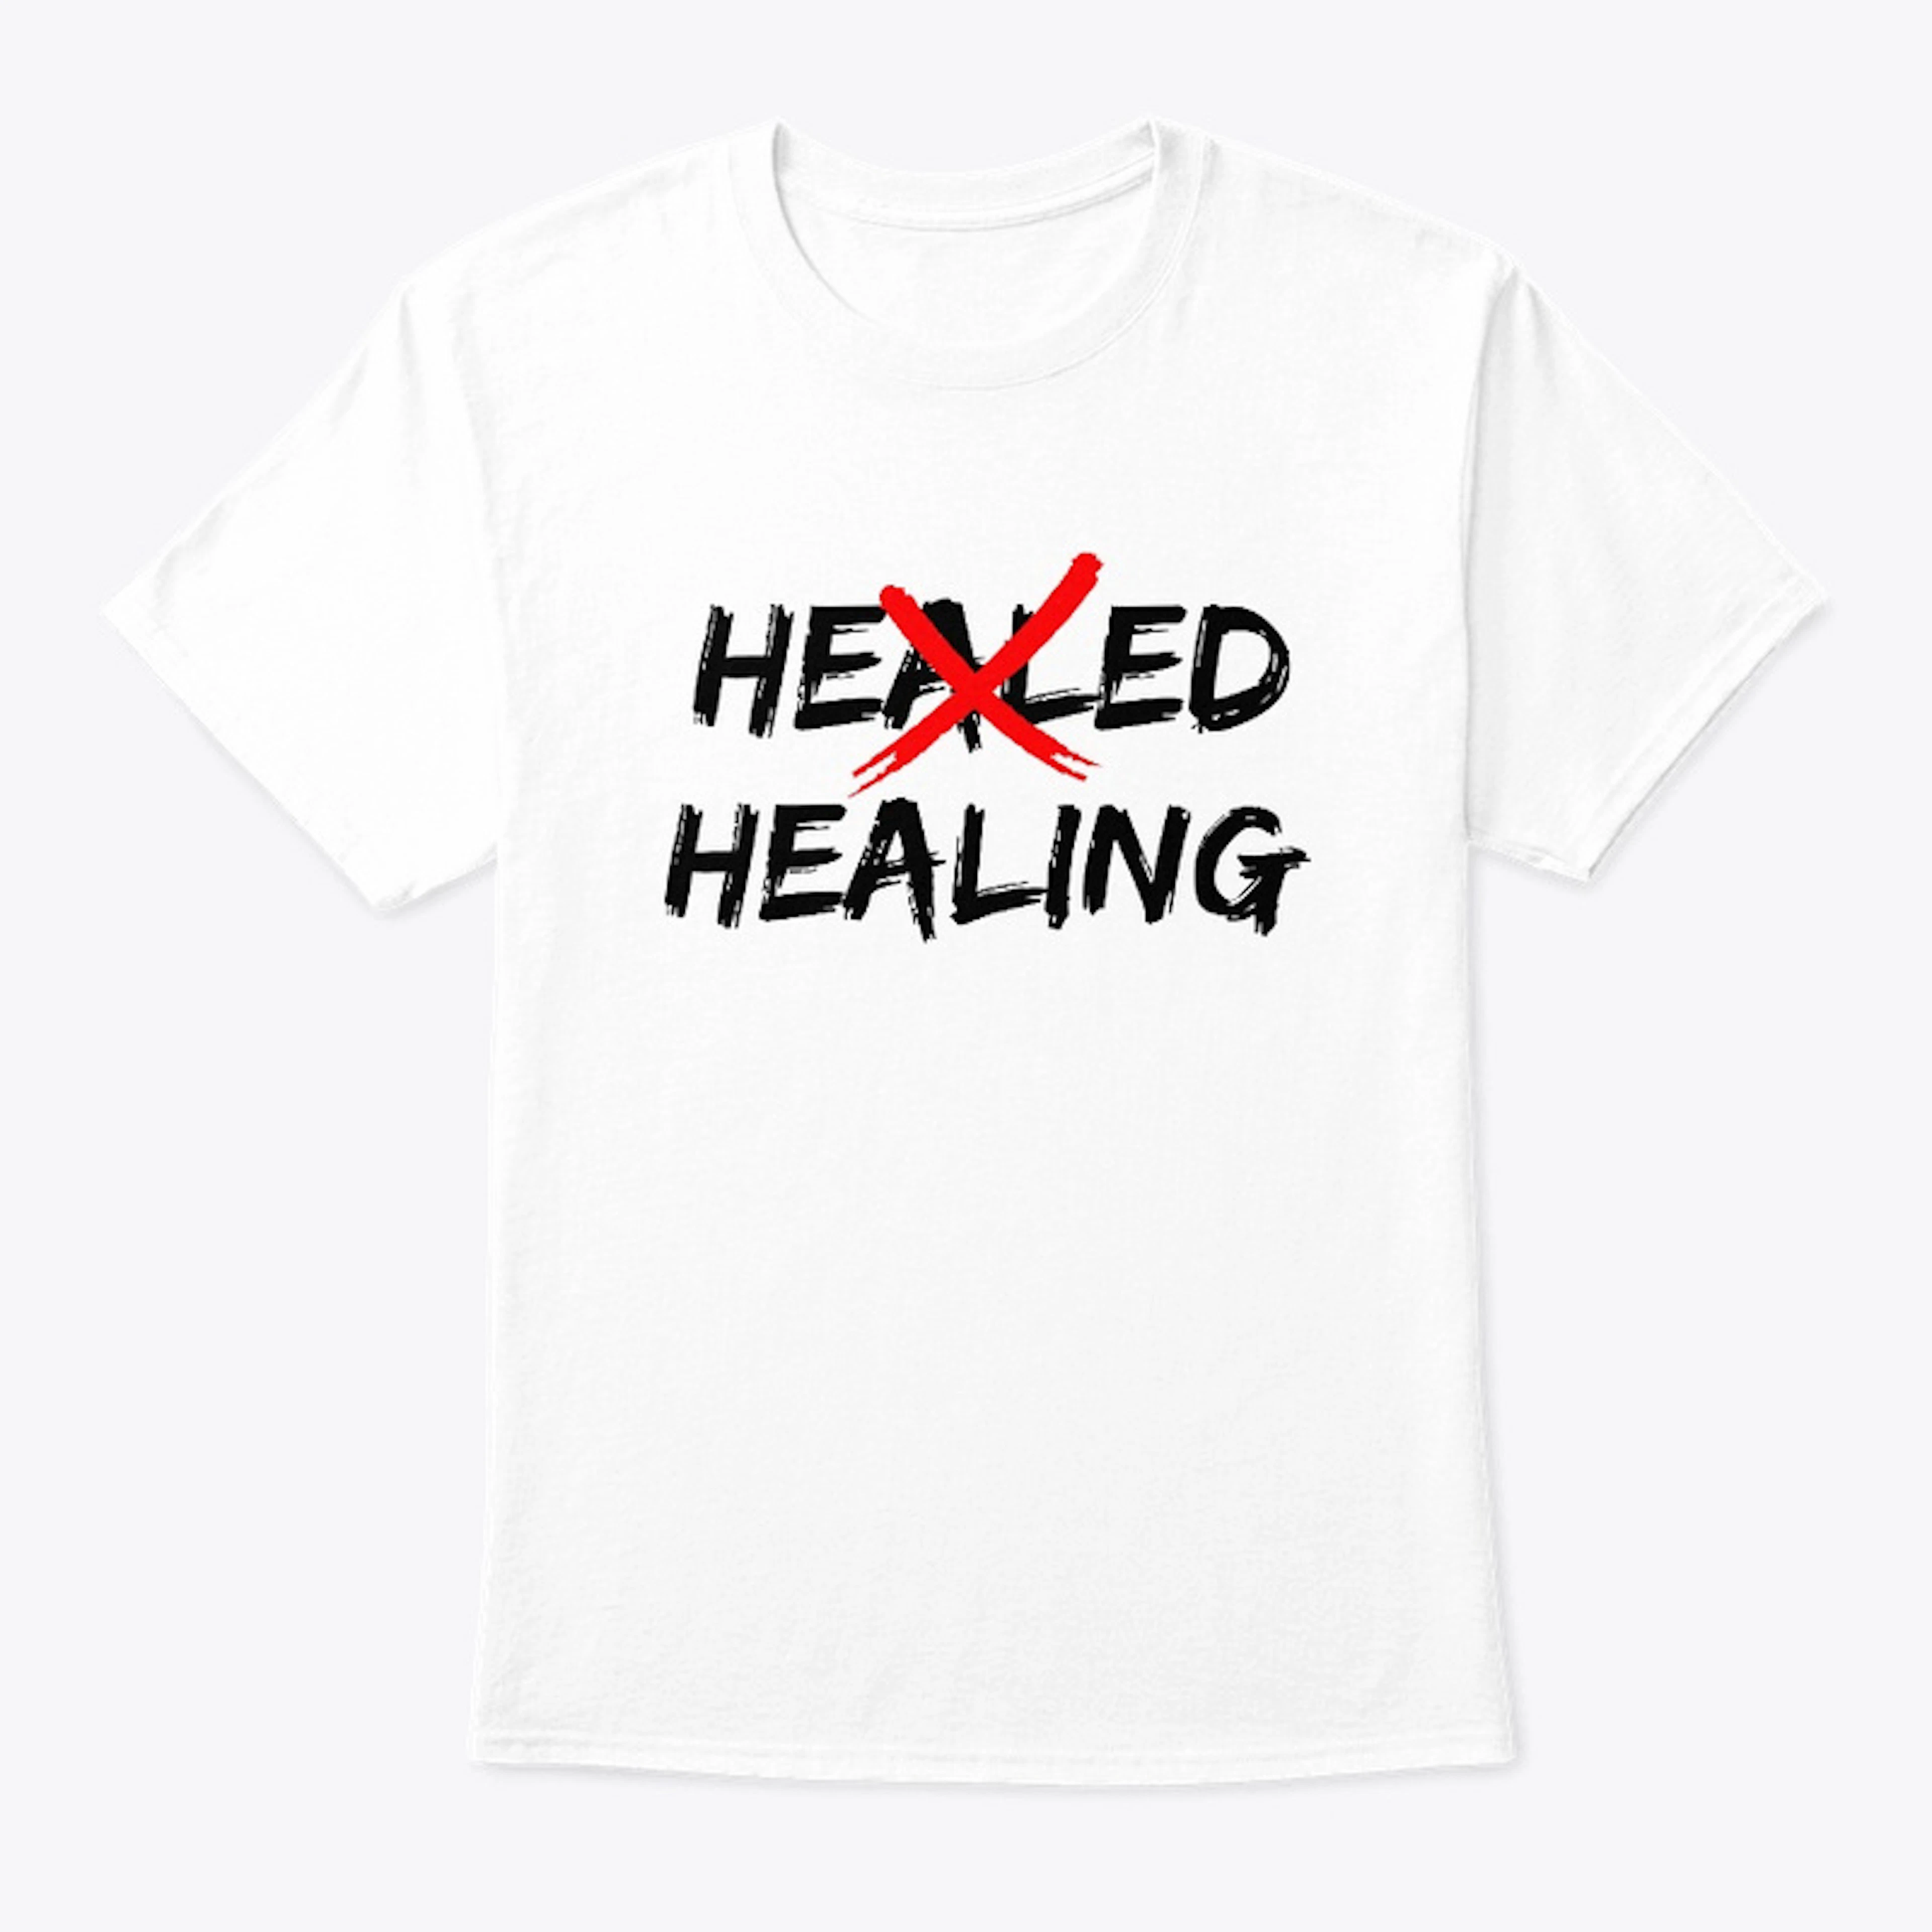 Healing, not Healed